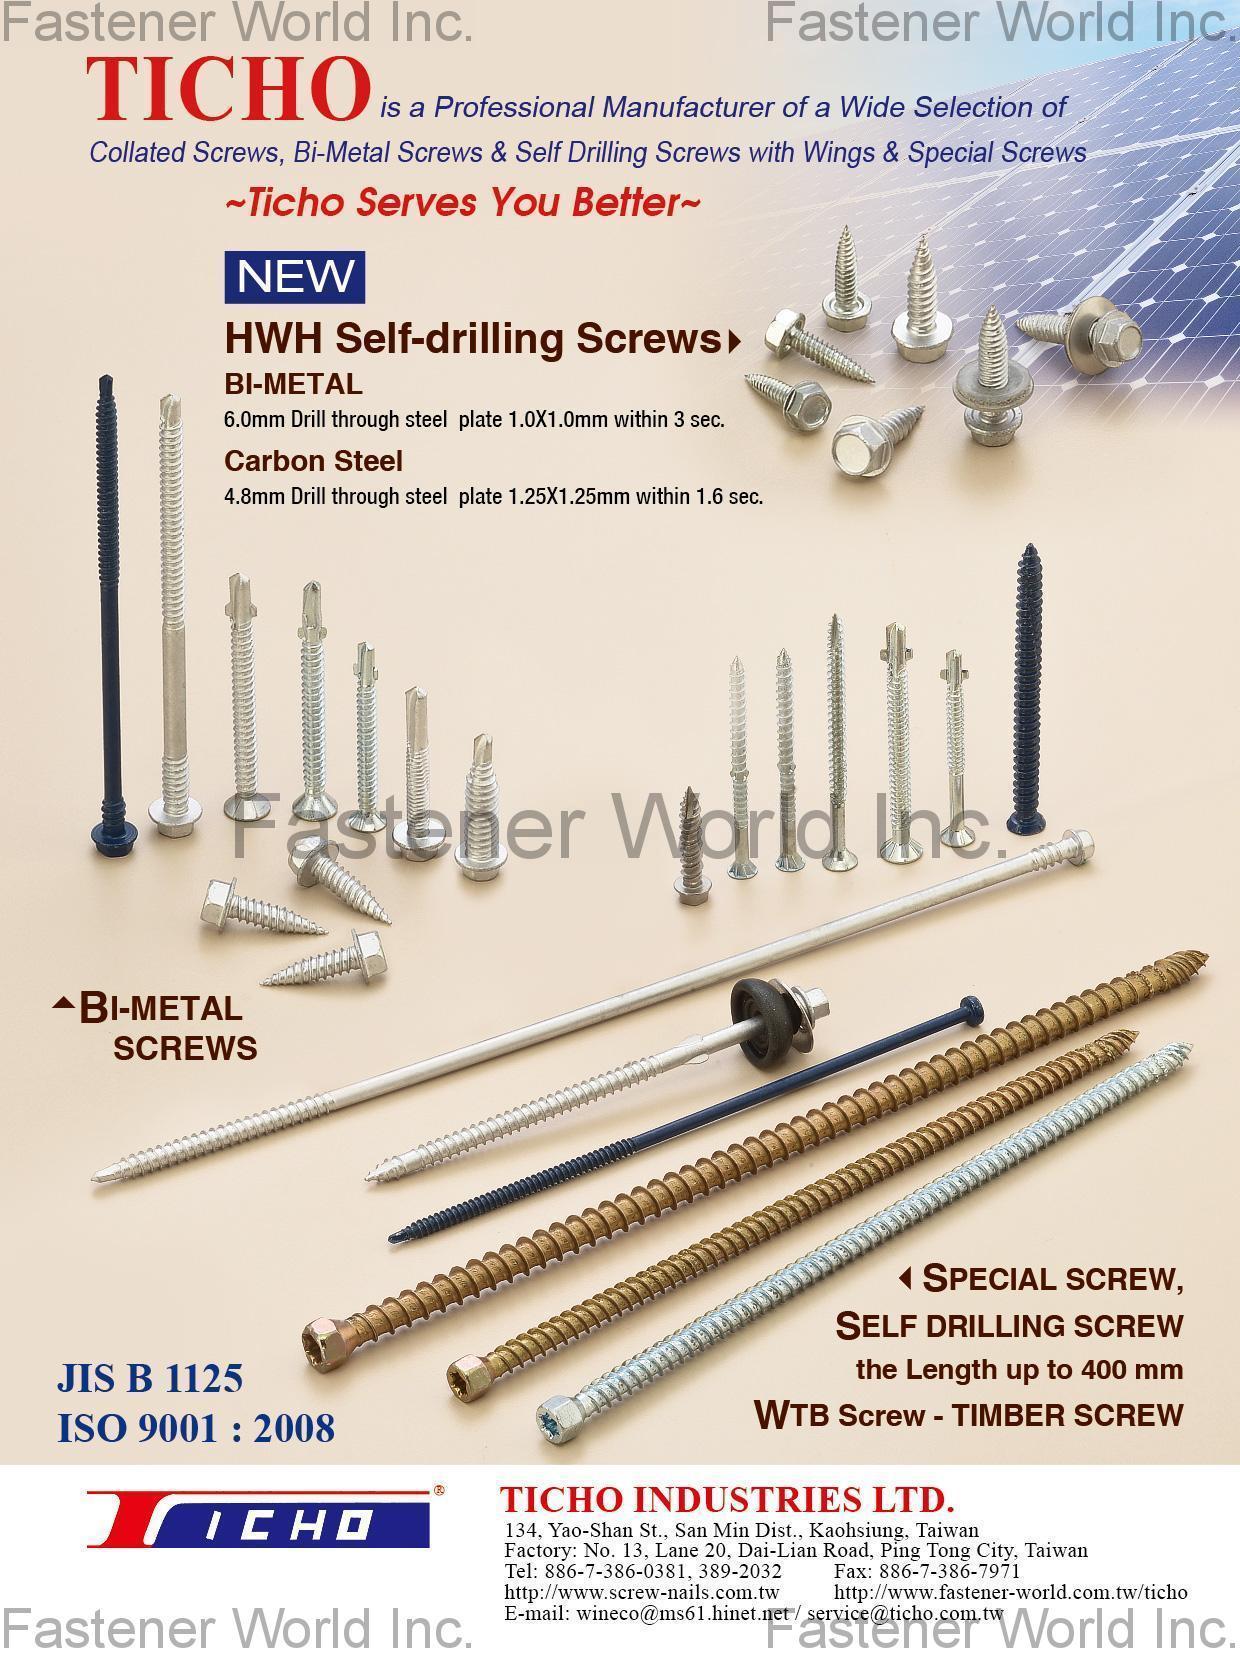 K. TICHO INDUSTRIES CO., LTD.  , HWH Self-drilling Screws, Bi-Metal Screw, Special Screw, Self-Drilling Screw, WTB Screw-Timber Screw , Self-drilling Screws